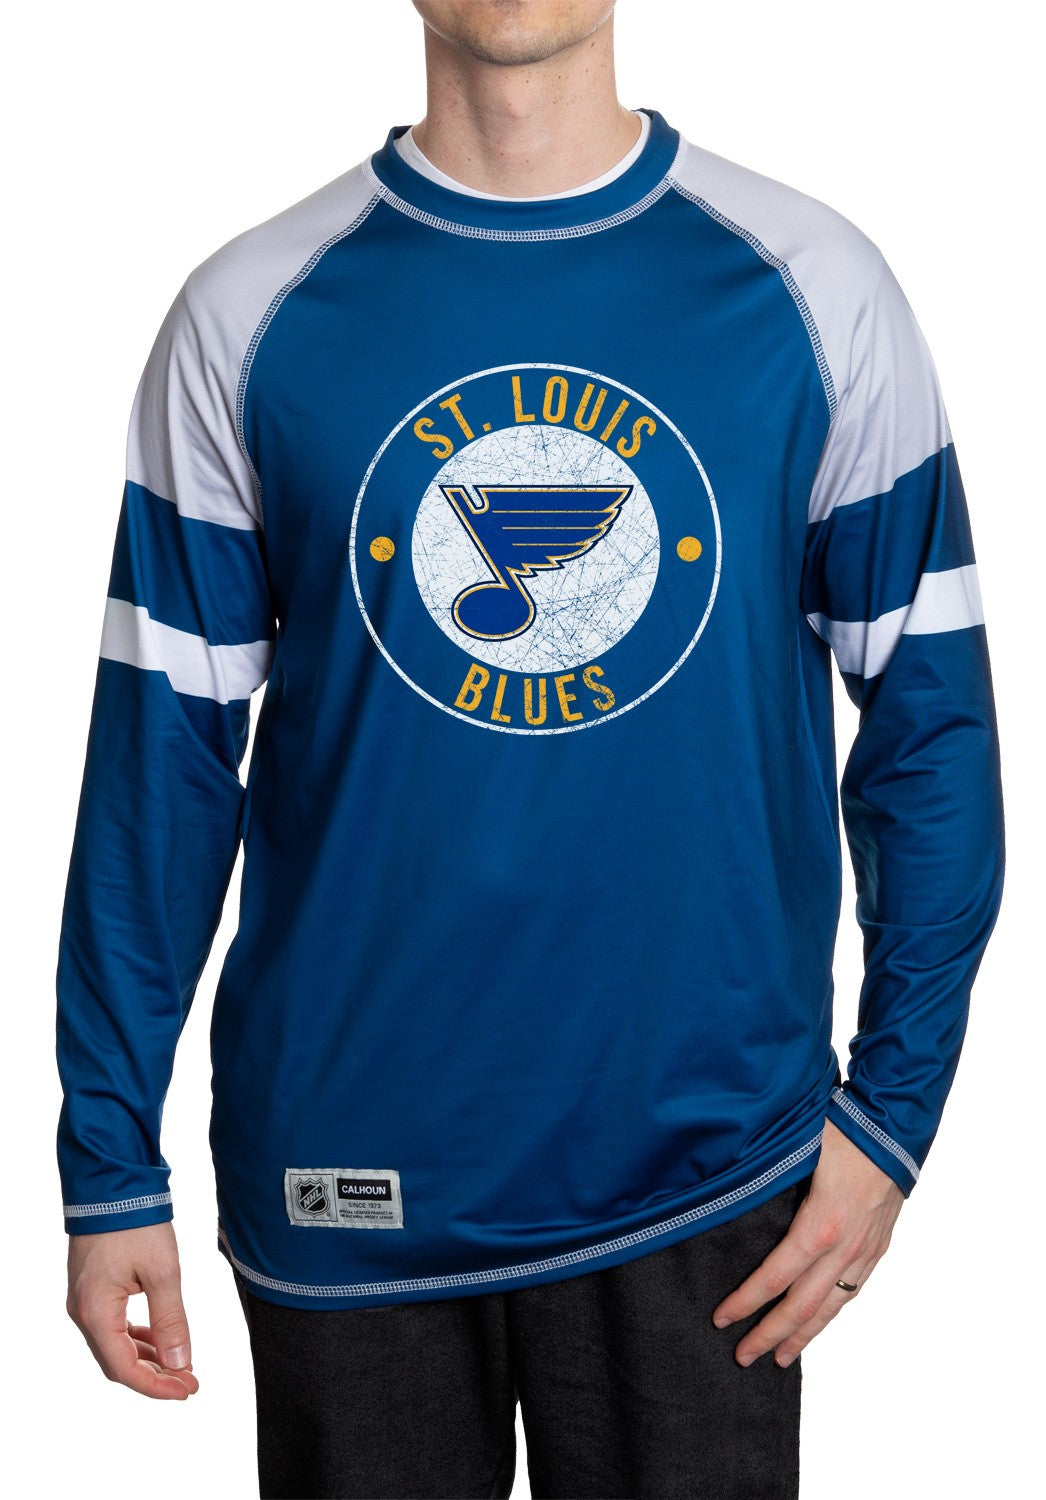 St. Louis Blues Thermal Long Sleeve Rash Guard Shirt